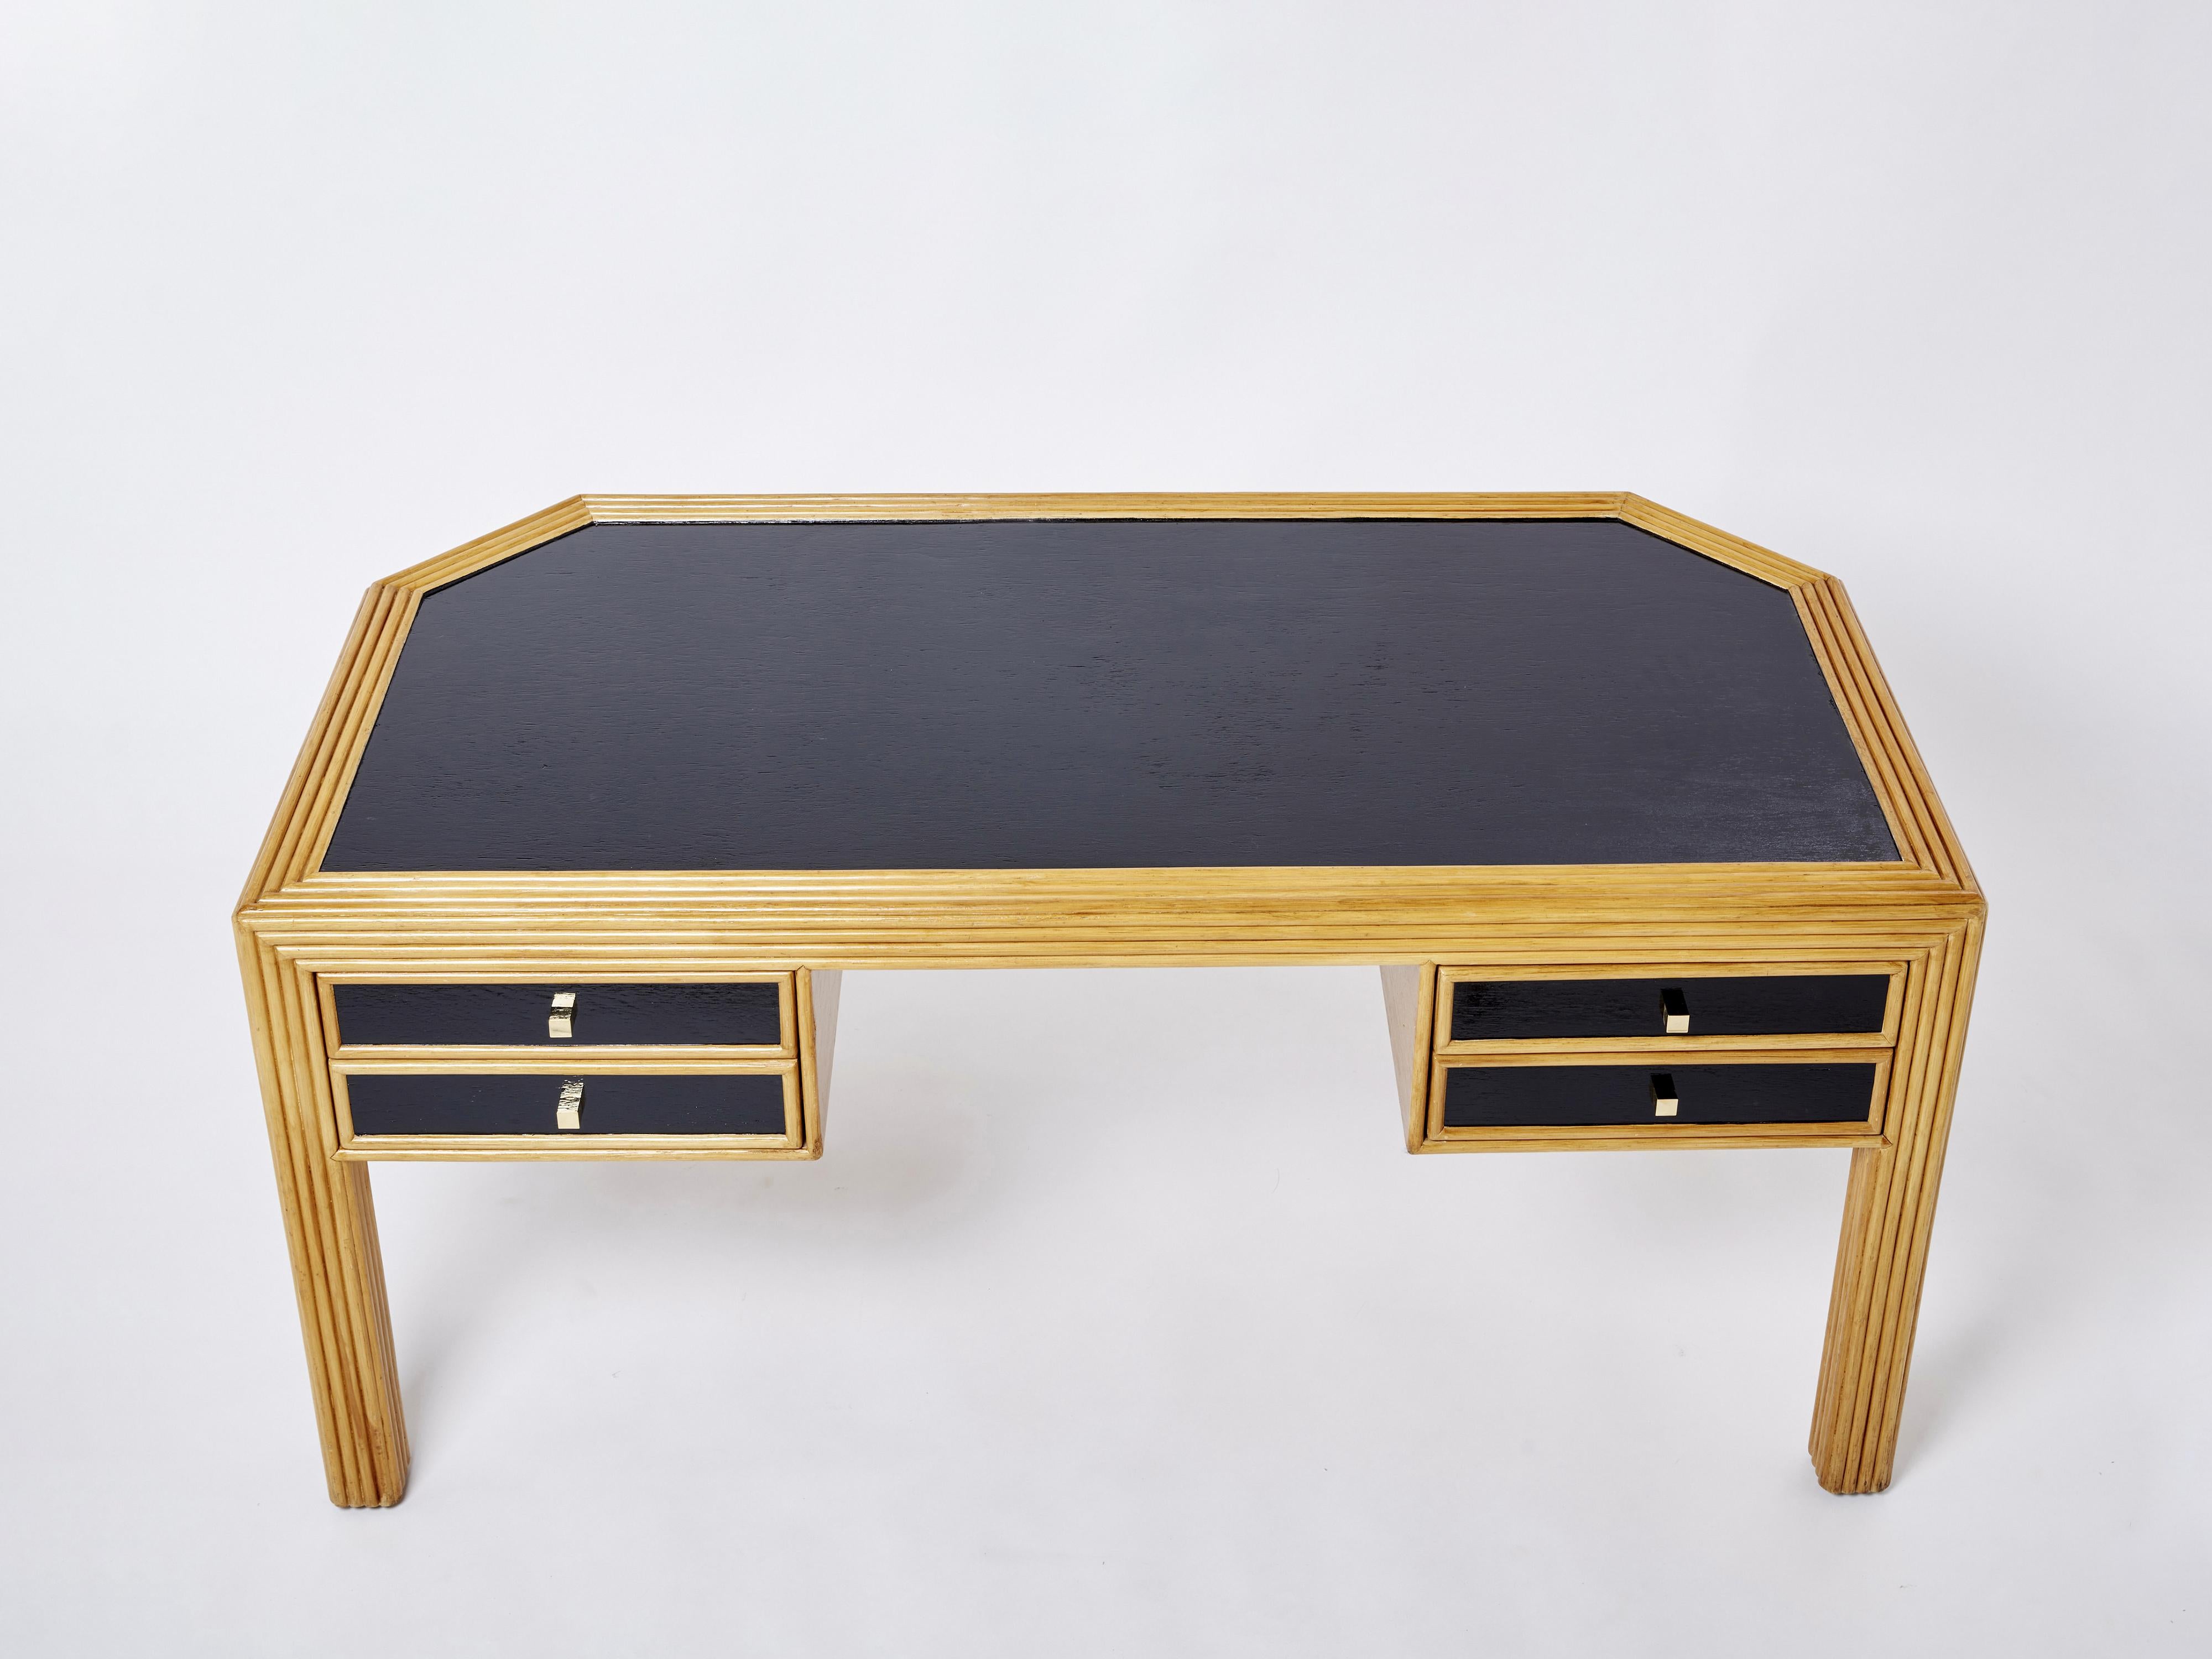 Italian Rattan Black Painted Wood Brass Handles Executive Desk 1970s For Sale 1